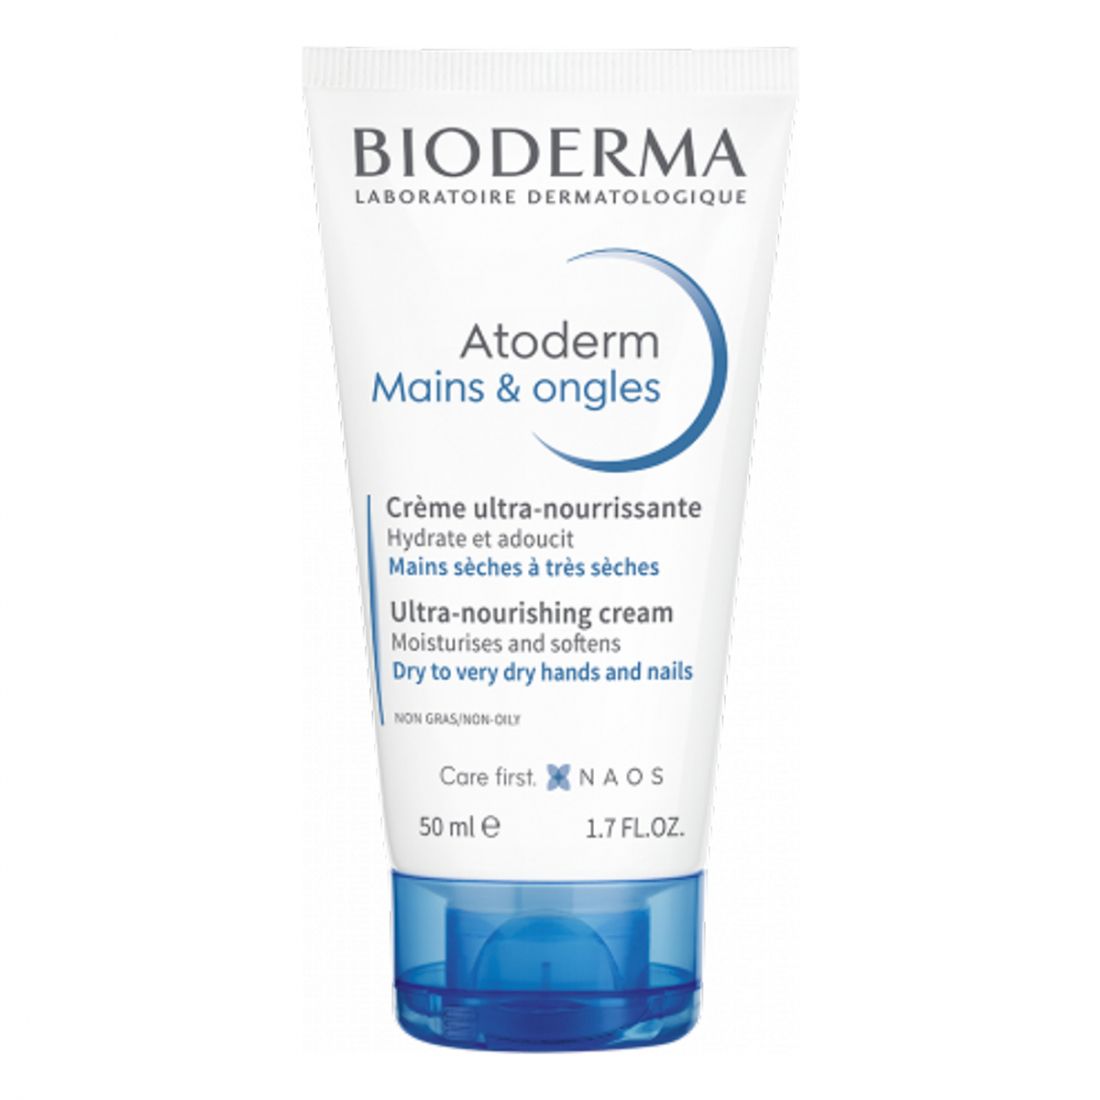 Bioderma - Crème mains & ongles 'Atoderm' - 50 ml